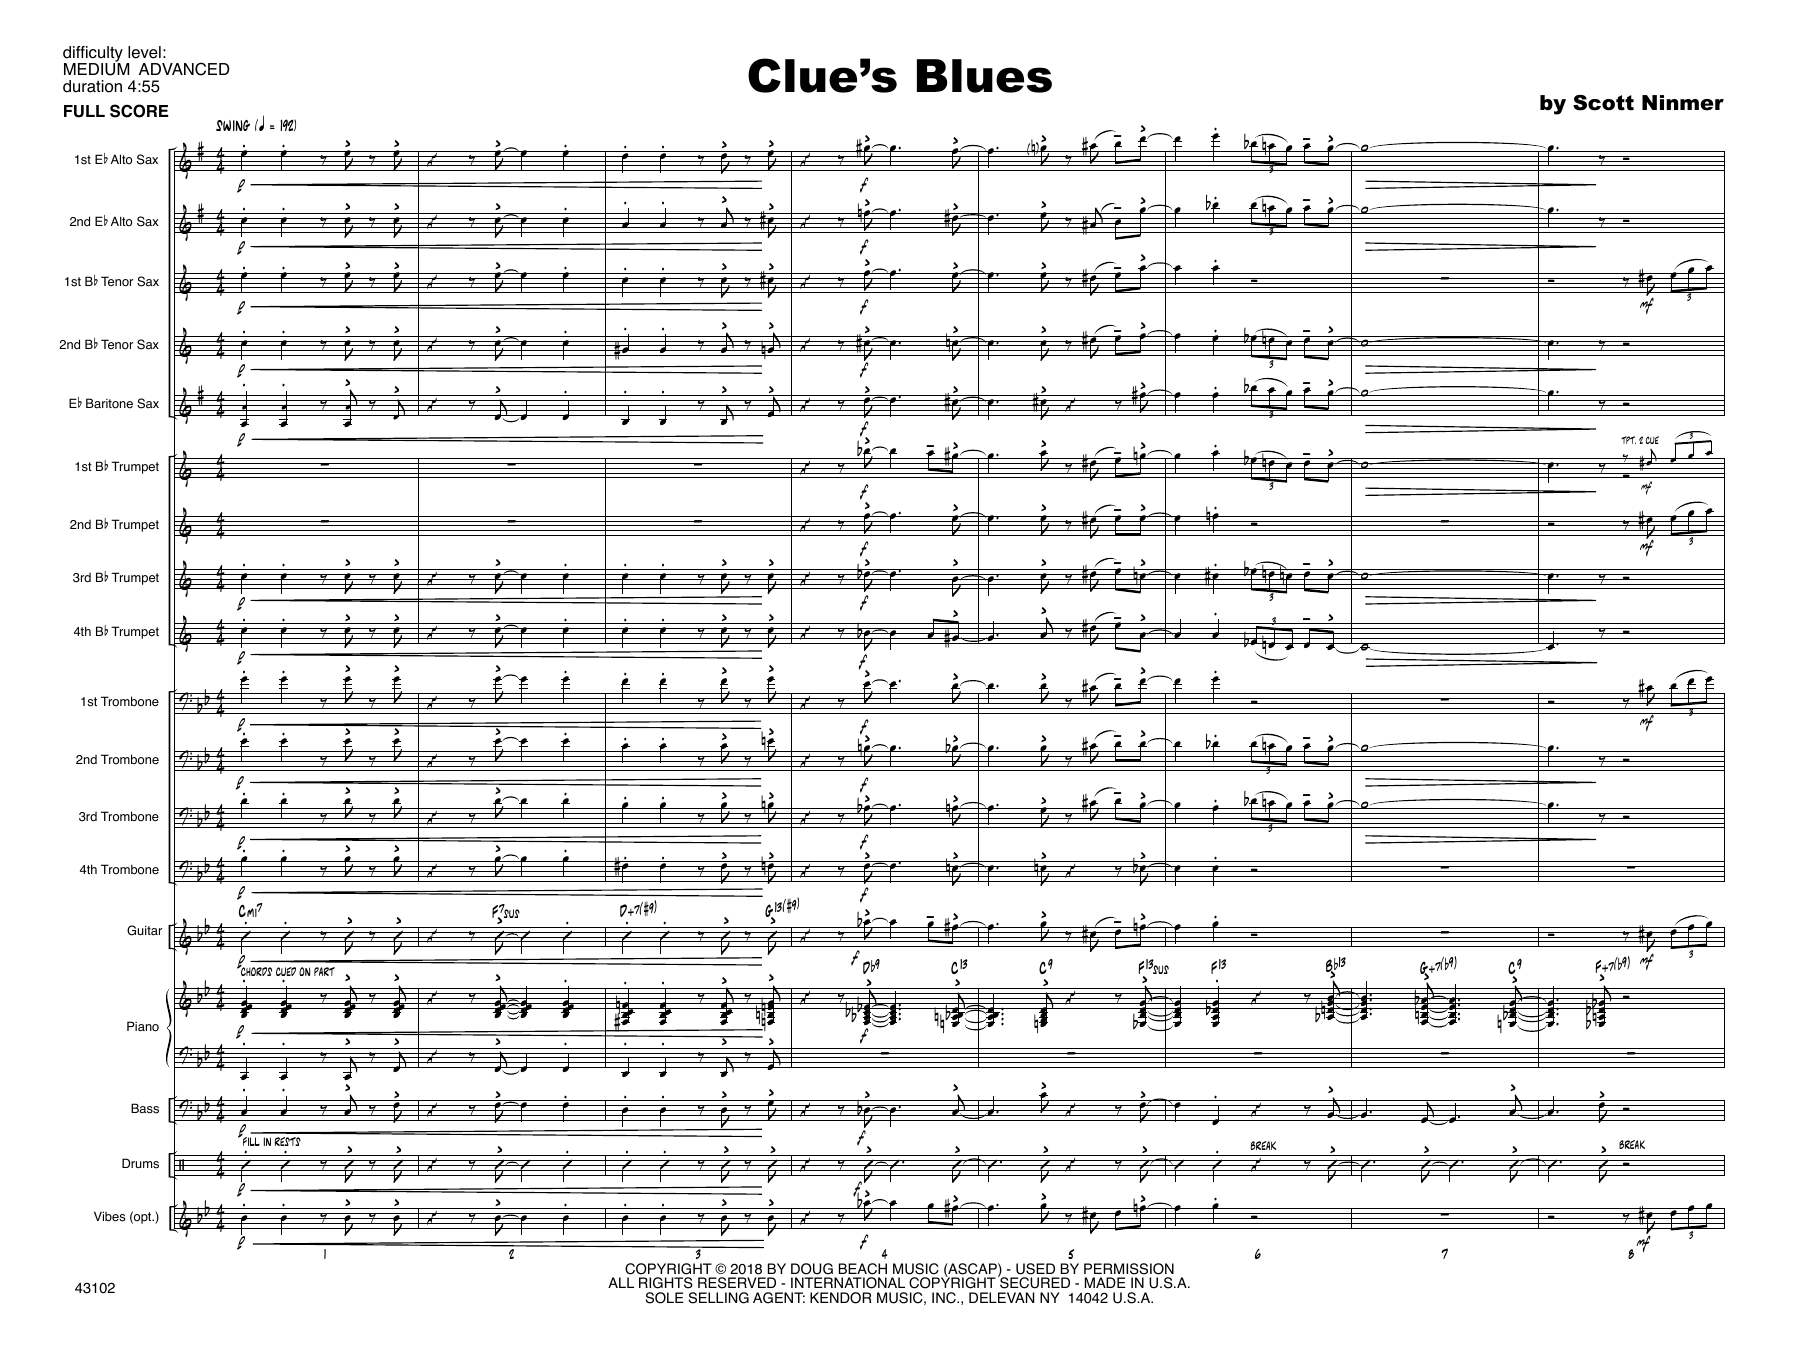 Download Scott Ninmer Clue's Blues - Full Score Sheet Music